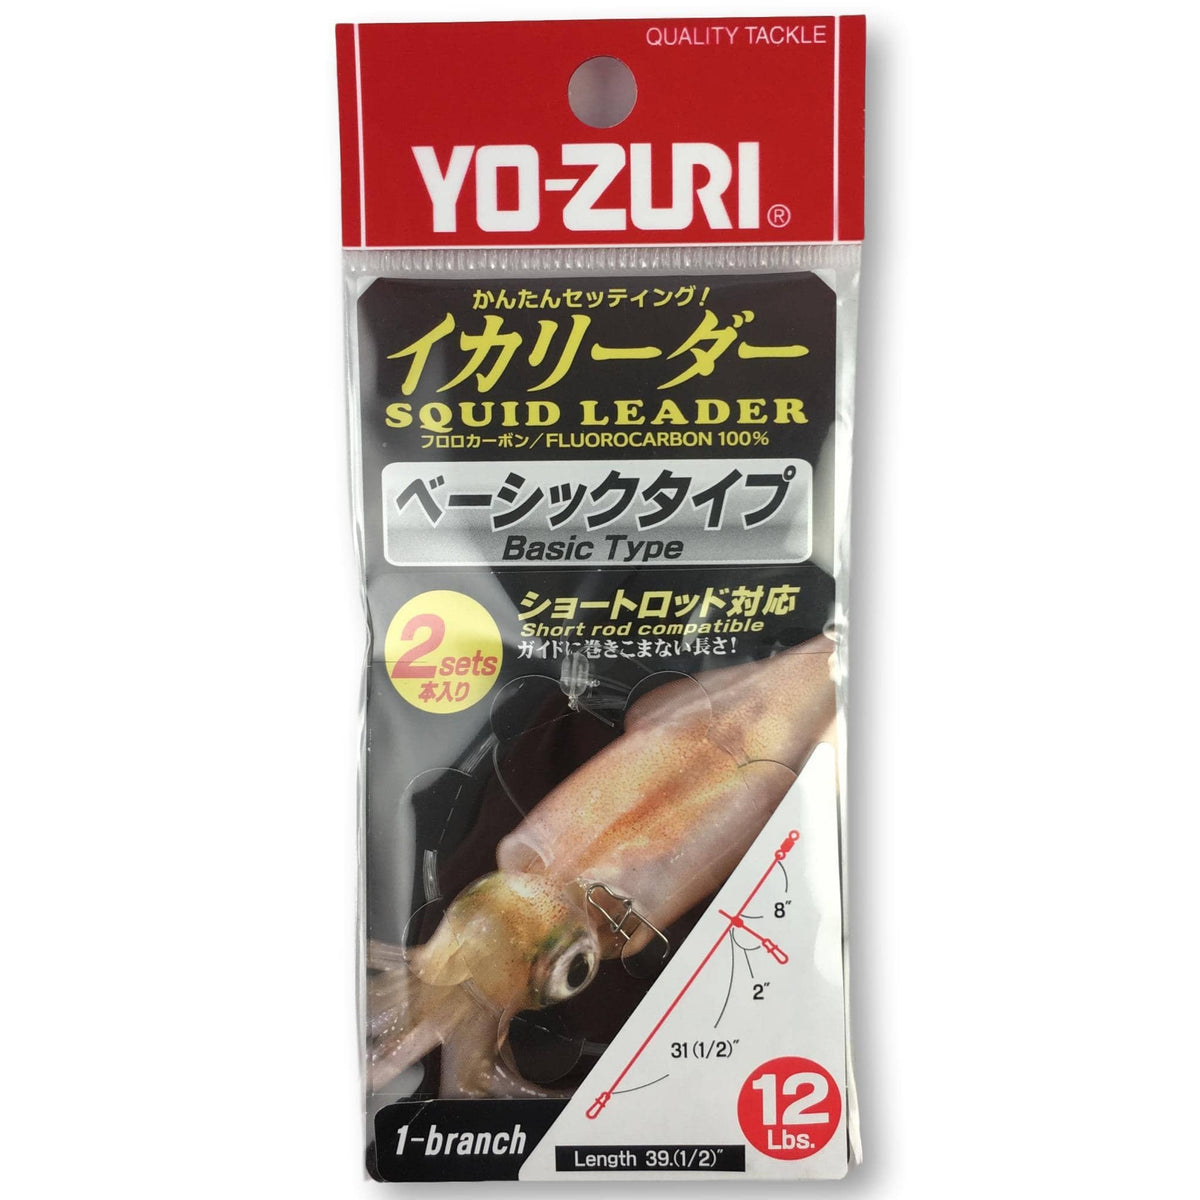 Yo-Zuri Squid Leaders 12 lbs - 2 branches - 1 set